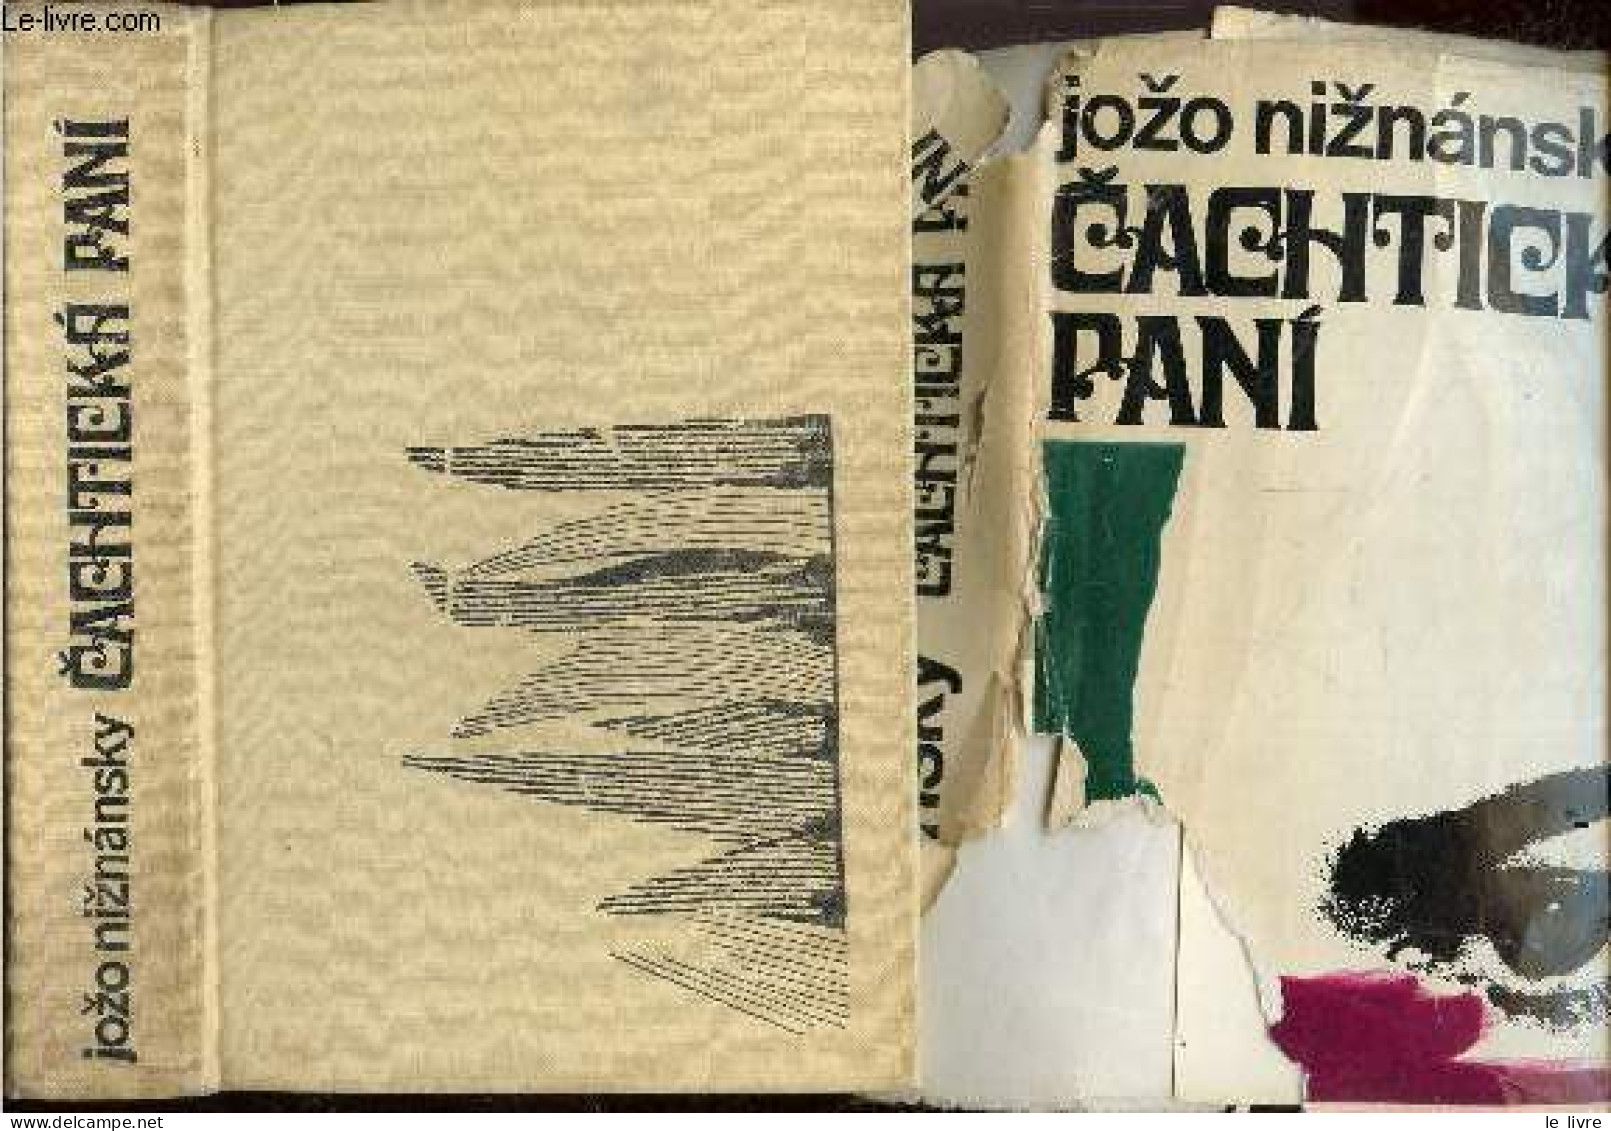 Cachticka Pani - Jozo Niznansky - Karel Klebes - 1970 - Cultural